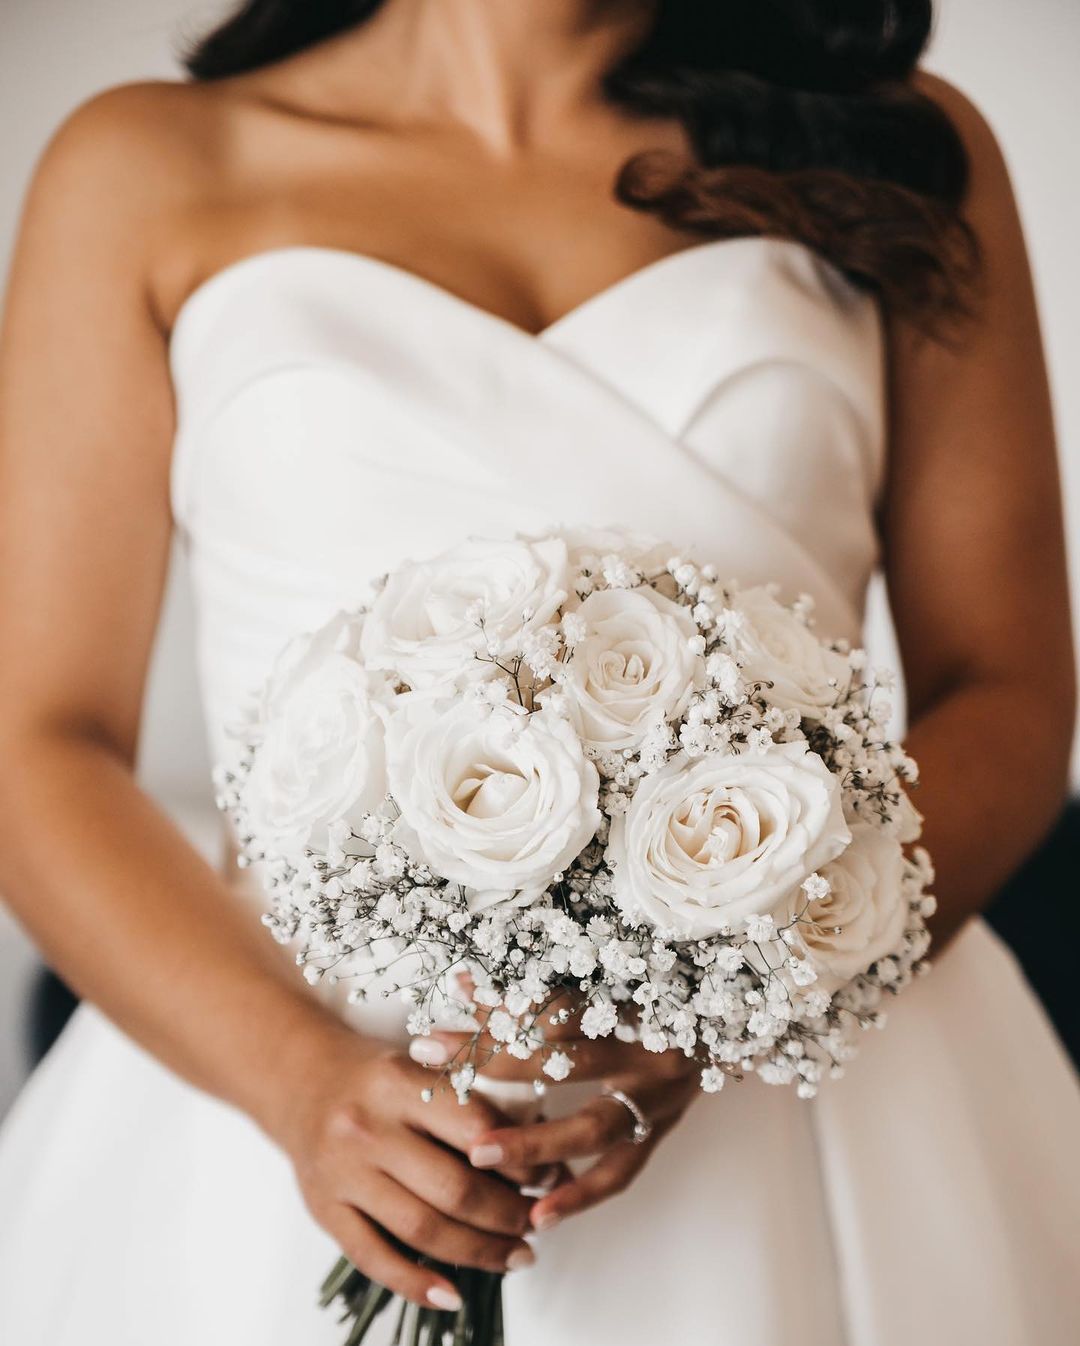 white roses and babys breath wedding bouquet via whitelilycouture